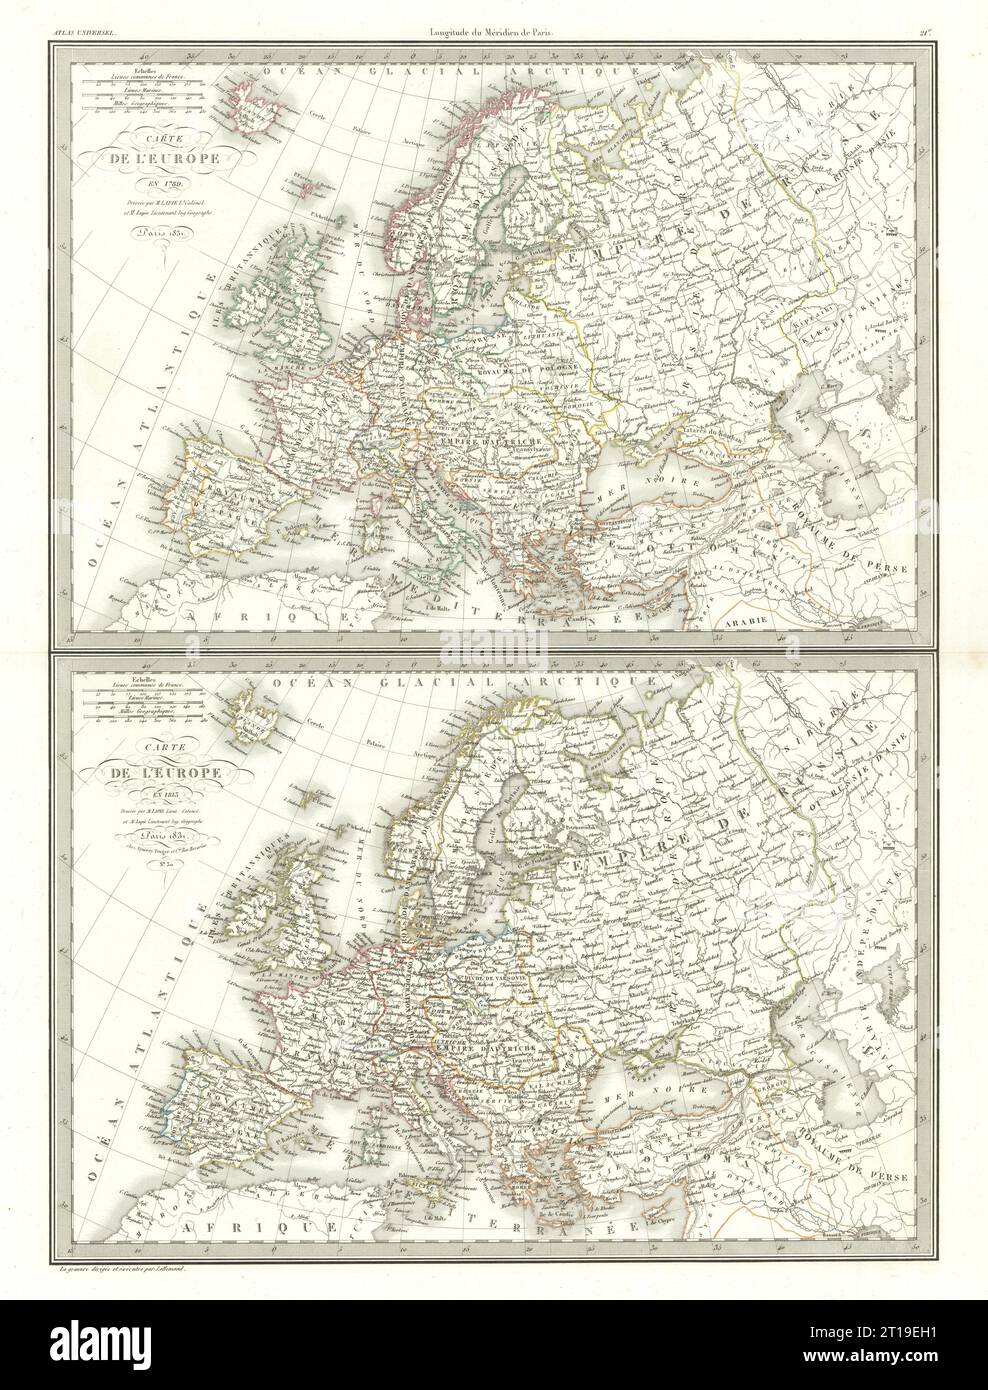 Carte de l'Europe en 1789 & 1813. Napoleonic Europe. LAPIE 1831 old map Stock Photo